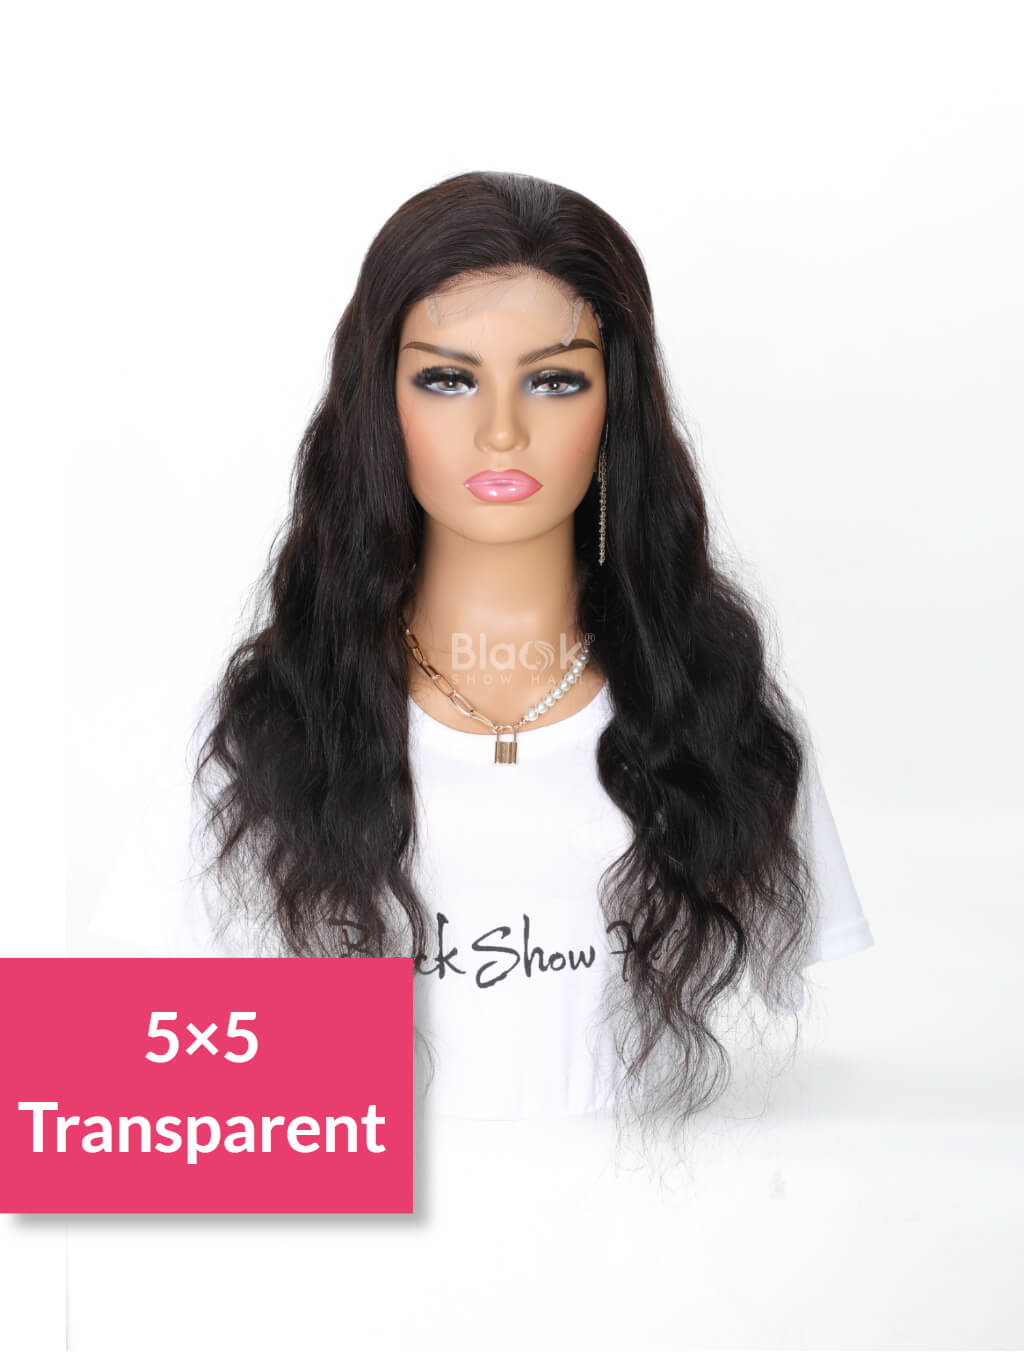 5x5 transparent lace closure wig body wave 1